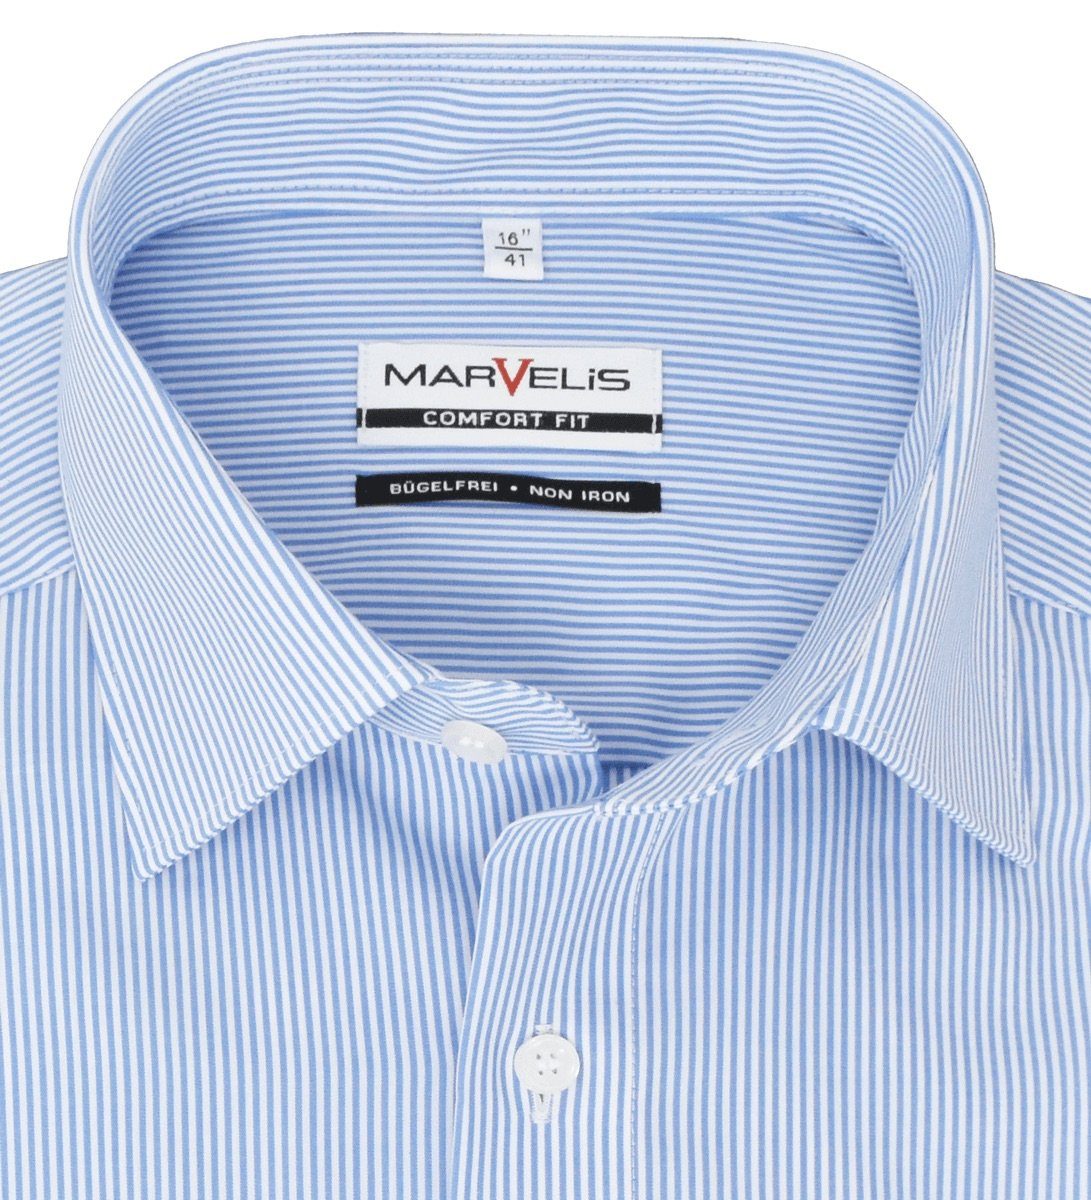 Blau Fit - Comfort - MARVELIS Businesshemd - Gestreift Businesshemd